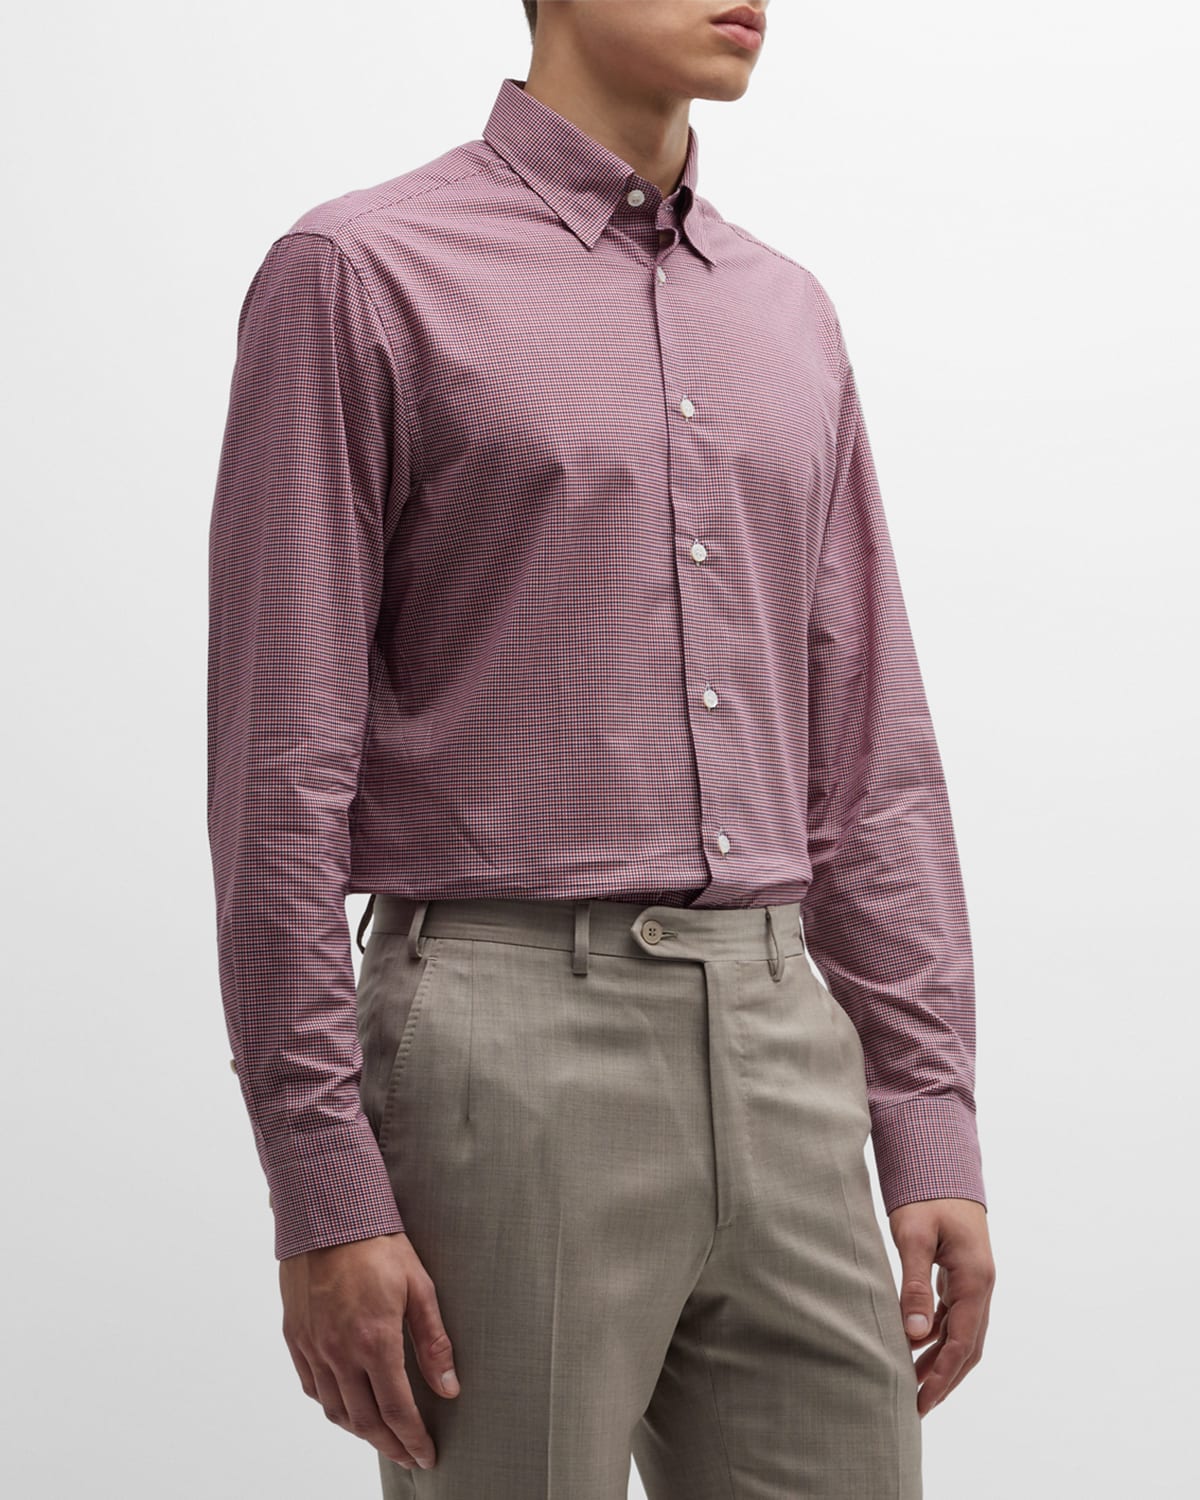 Men's Micro-Check Cotton Sport Shirt